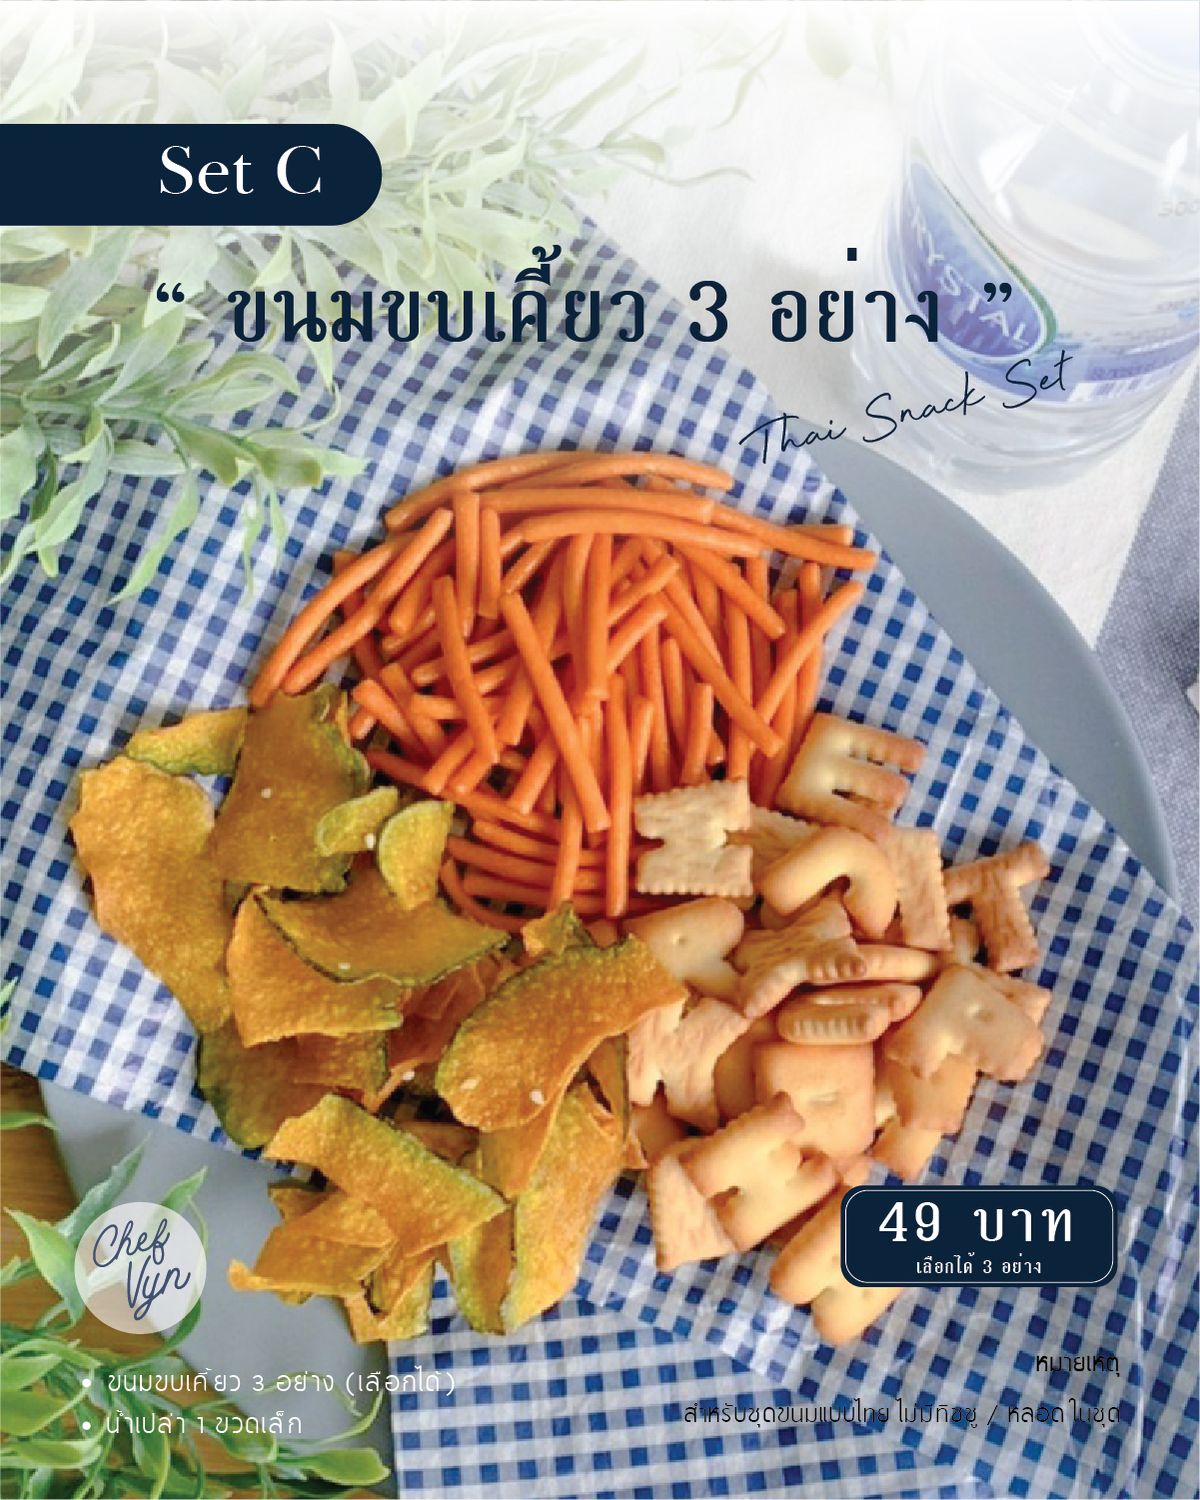 Thai Snack ขนม 3 อย่างพร้อมน้ำและถุง SetC 01